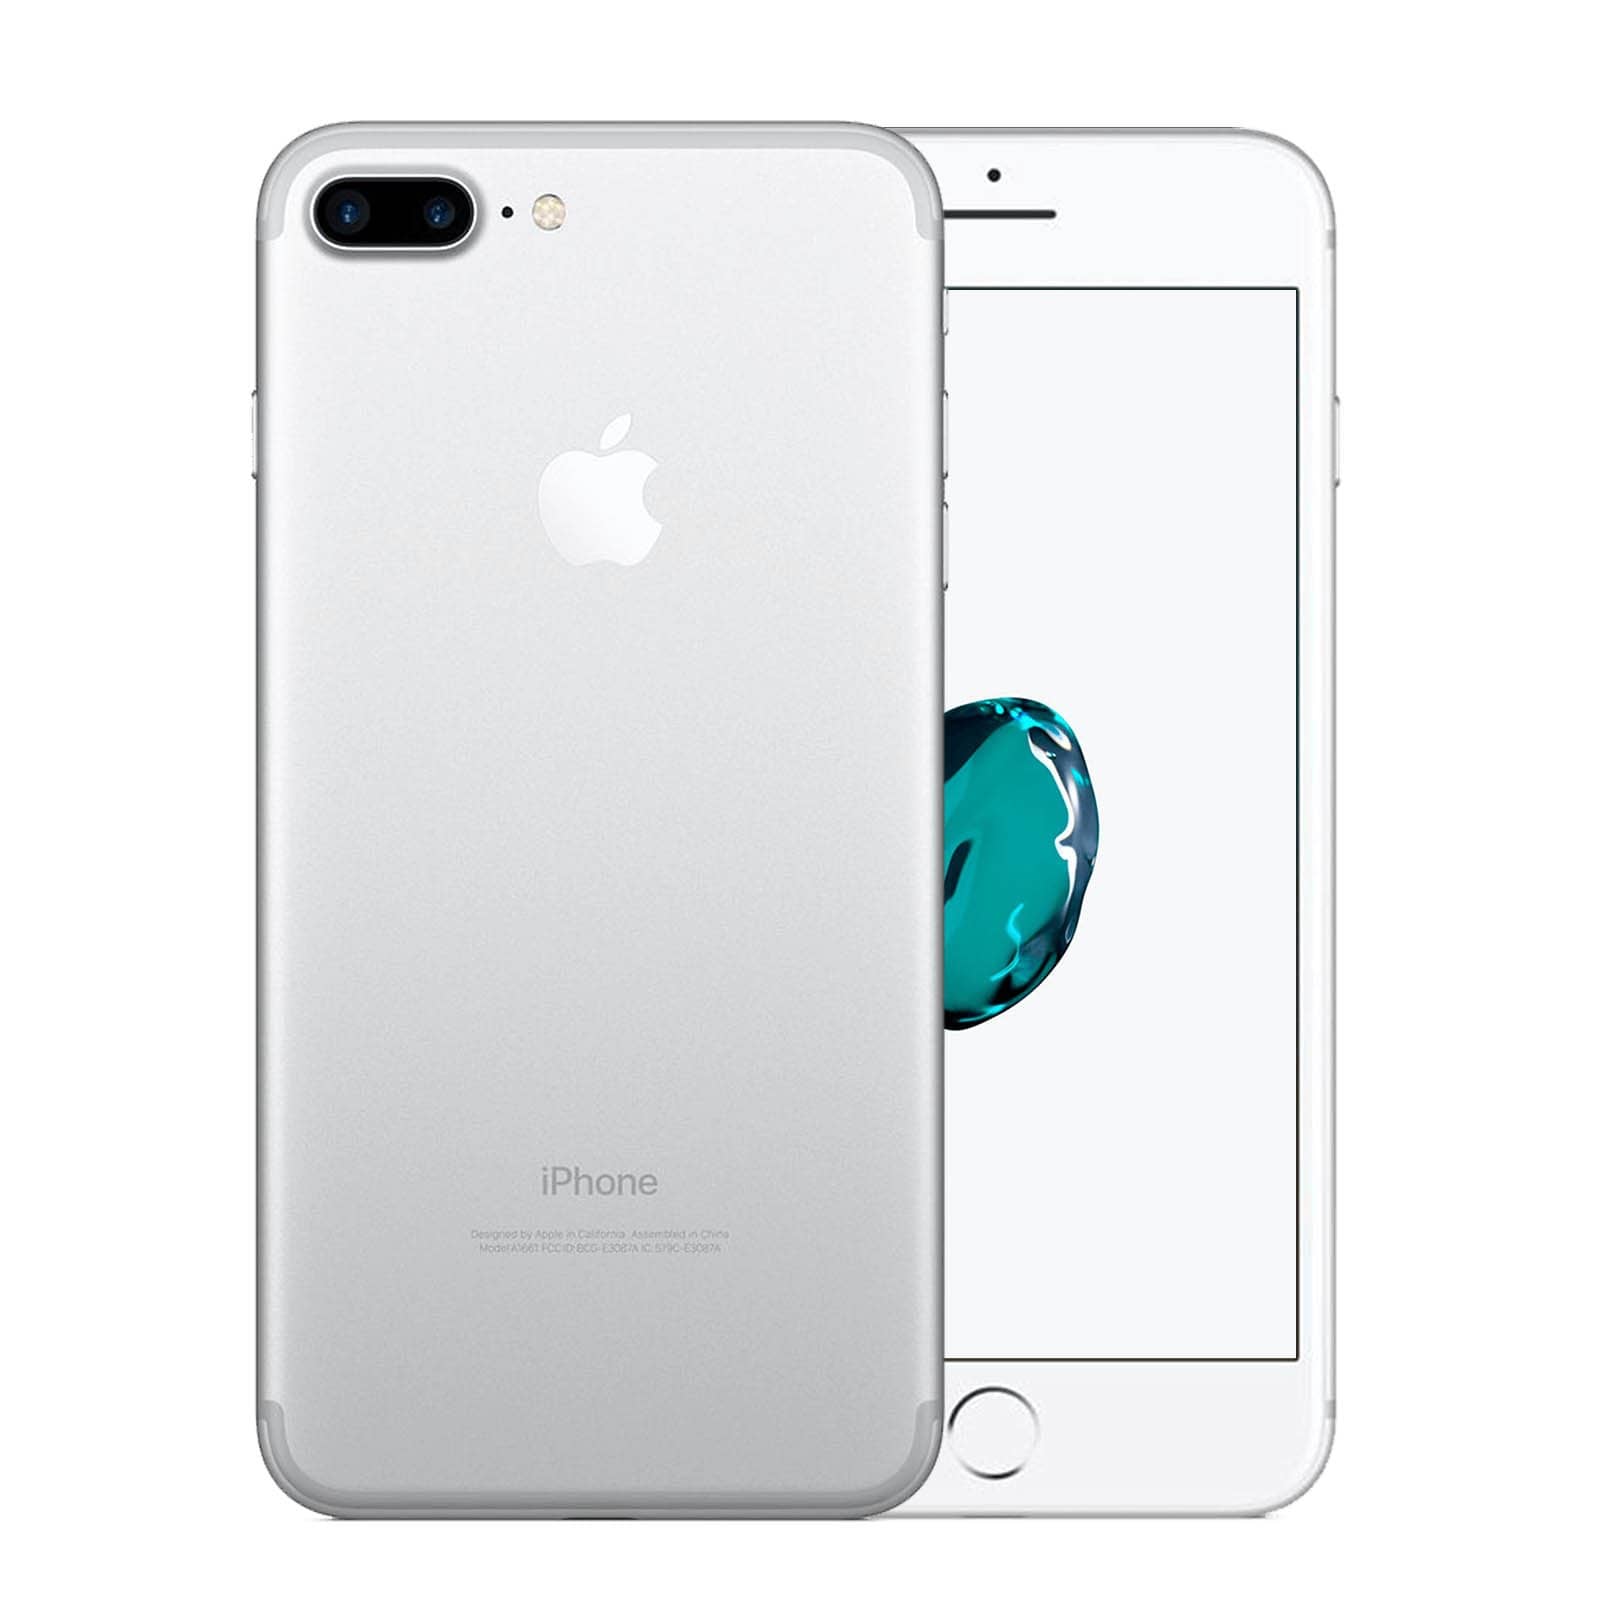 Apple iPhone 7 Plus 32GB Silver Very Good - Unlocked 32GB Silver Very Good